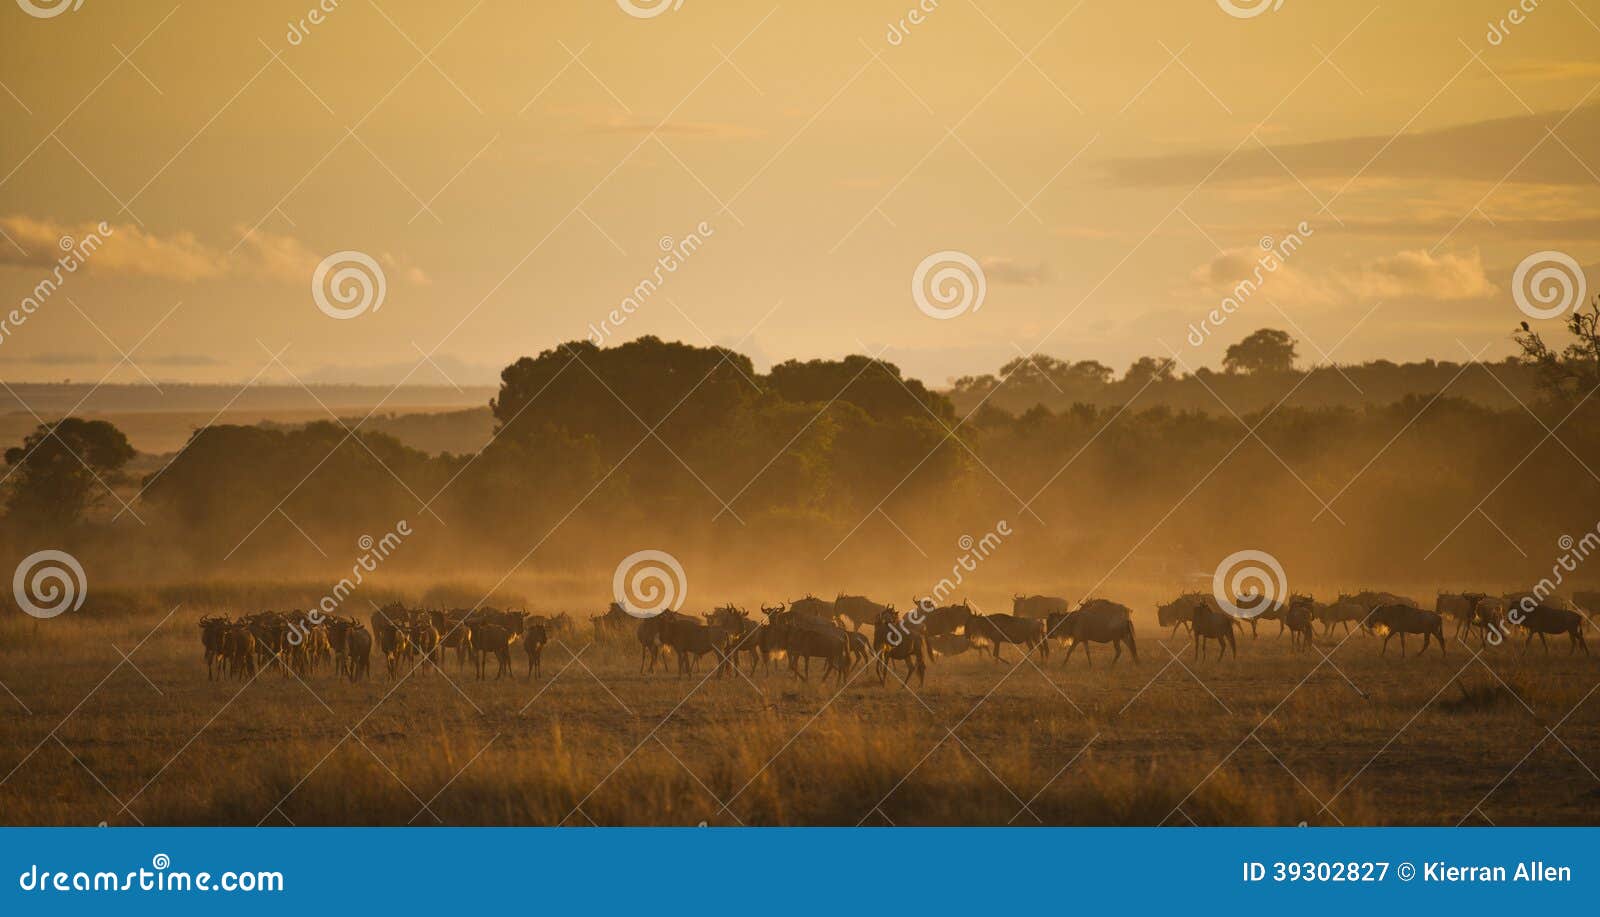 sunrise with a herd of wildebeest, kenya